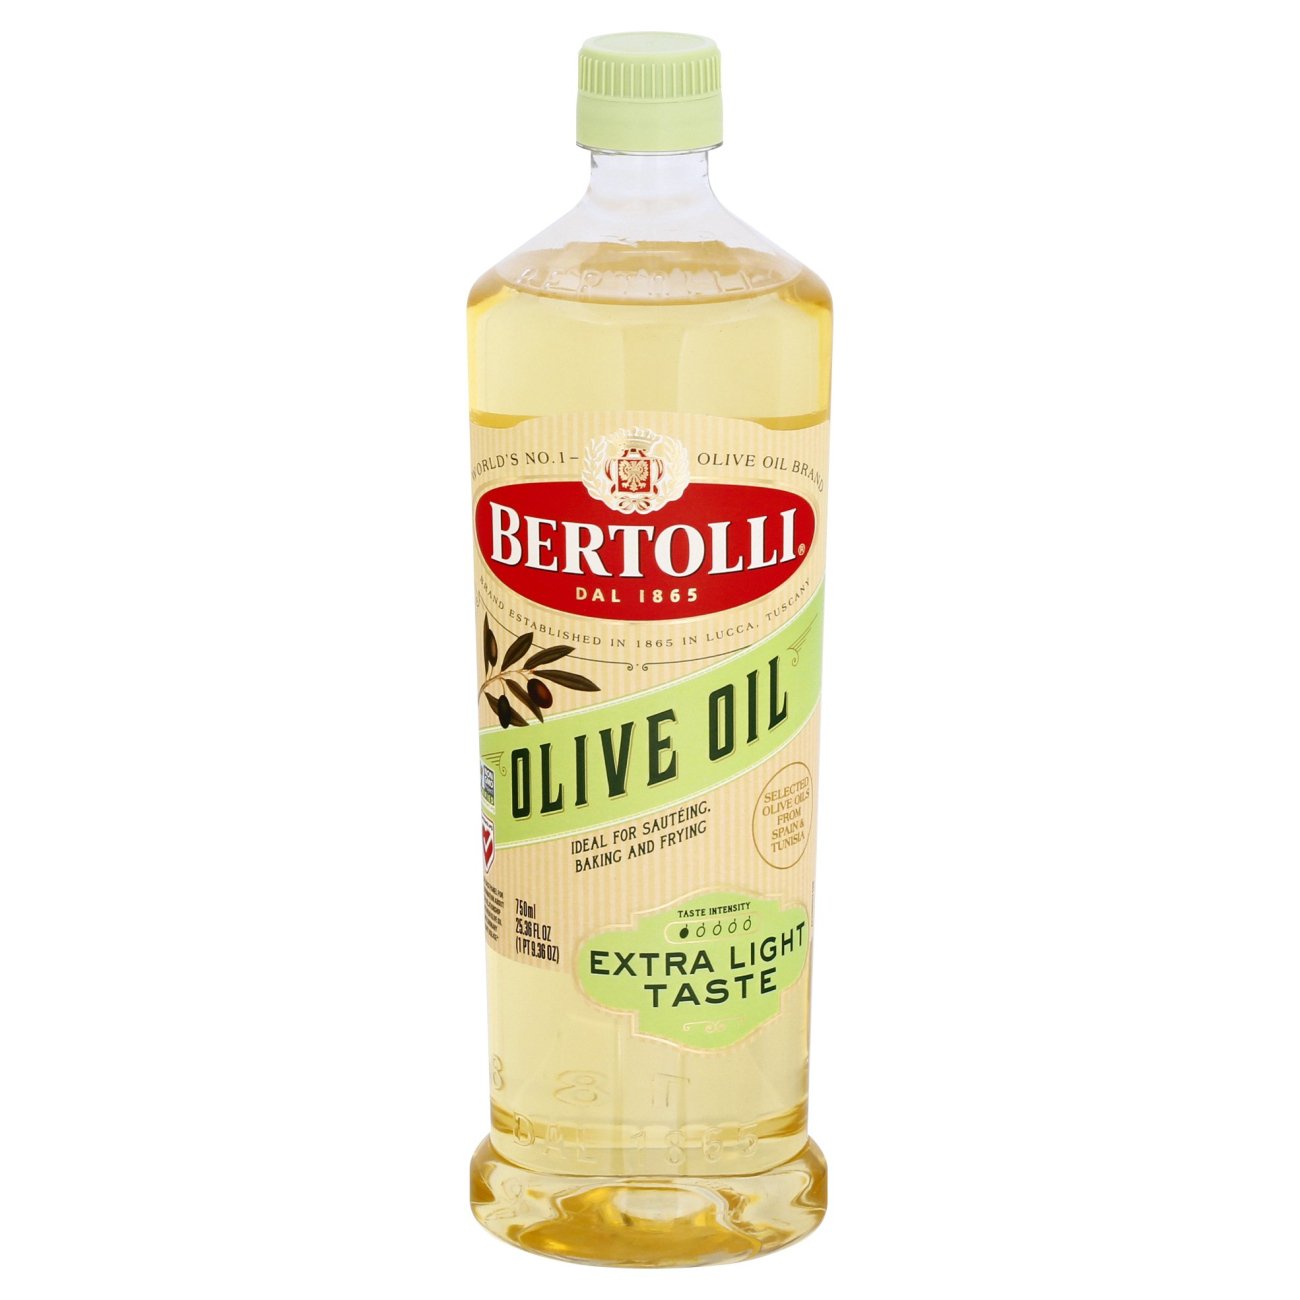 Bertolli Extra Light Tasting Olive Oil Shop Oils at H-E-B